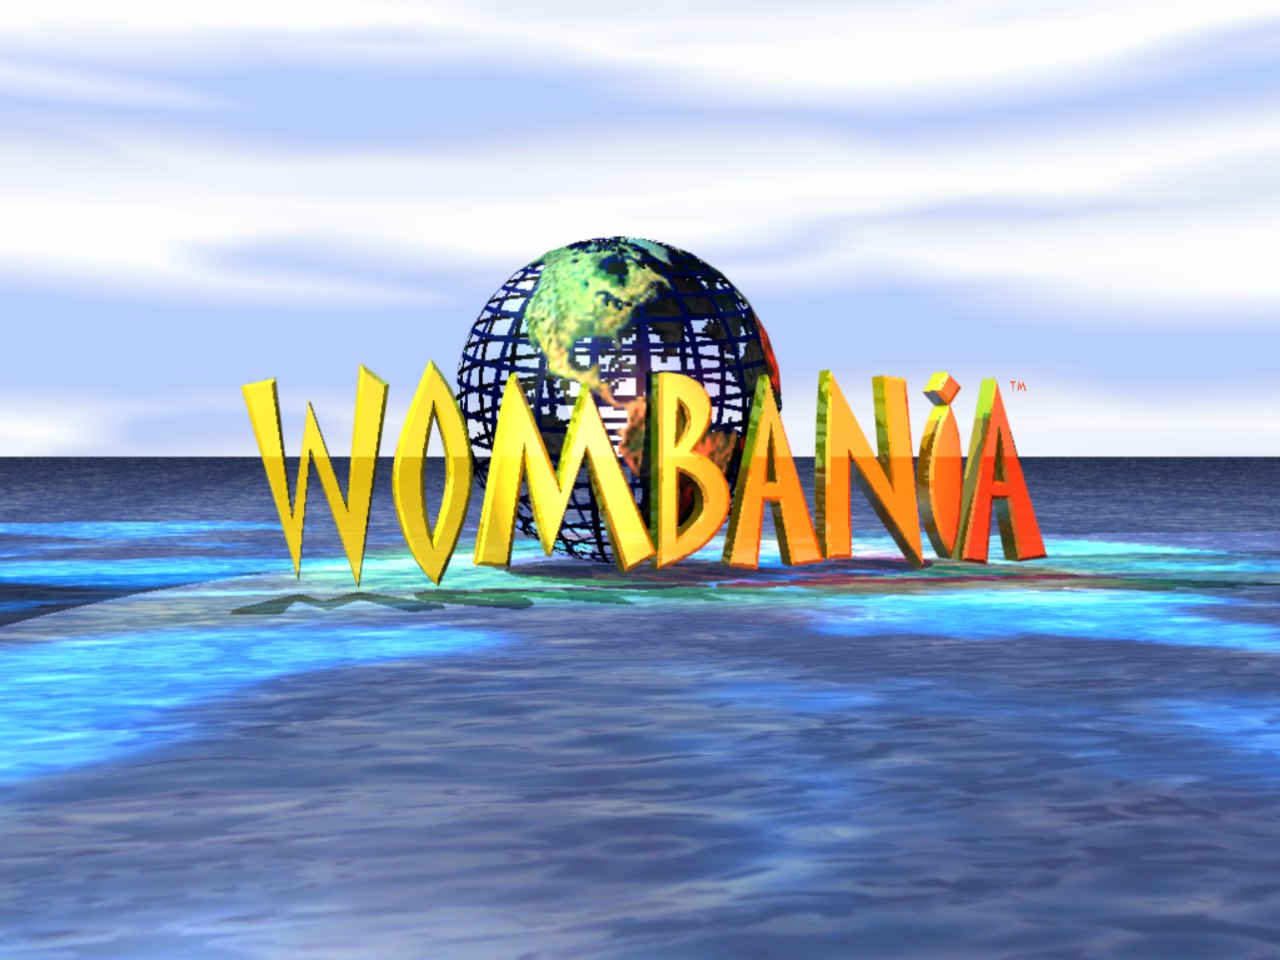 Wombania Logo Wallpaper X